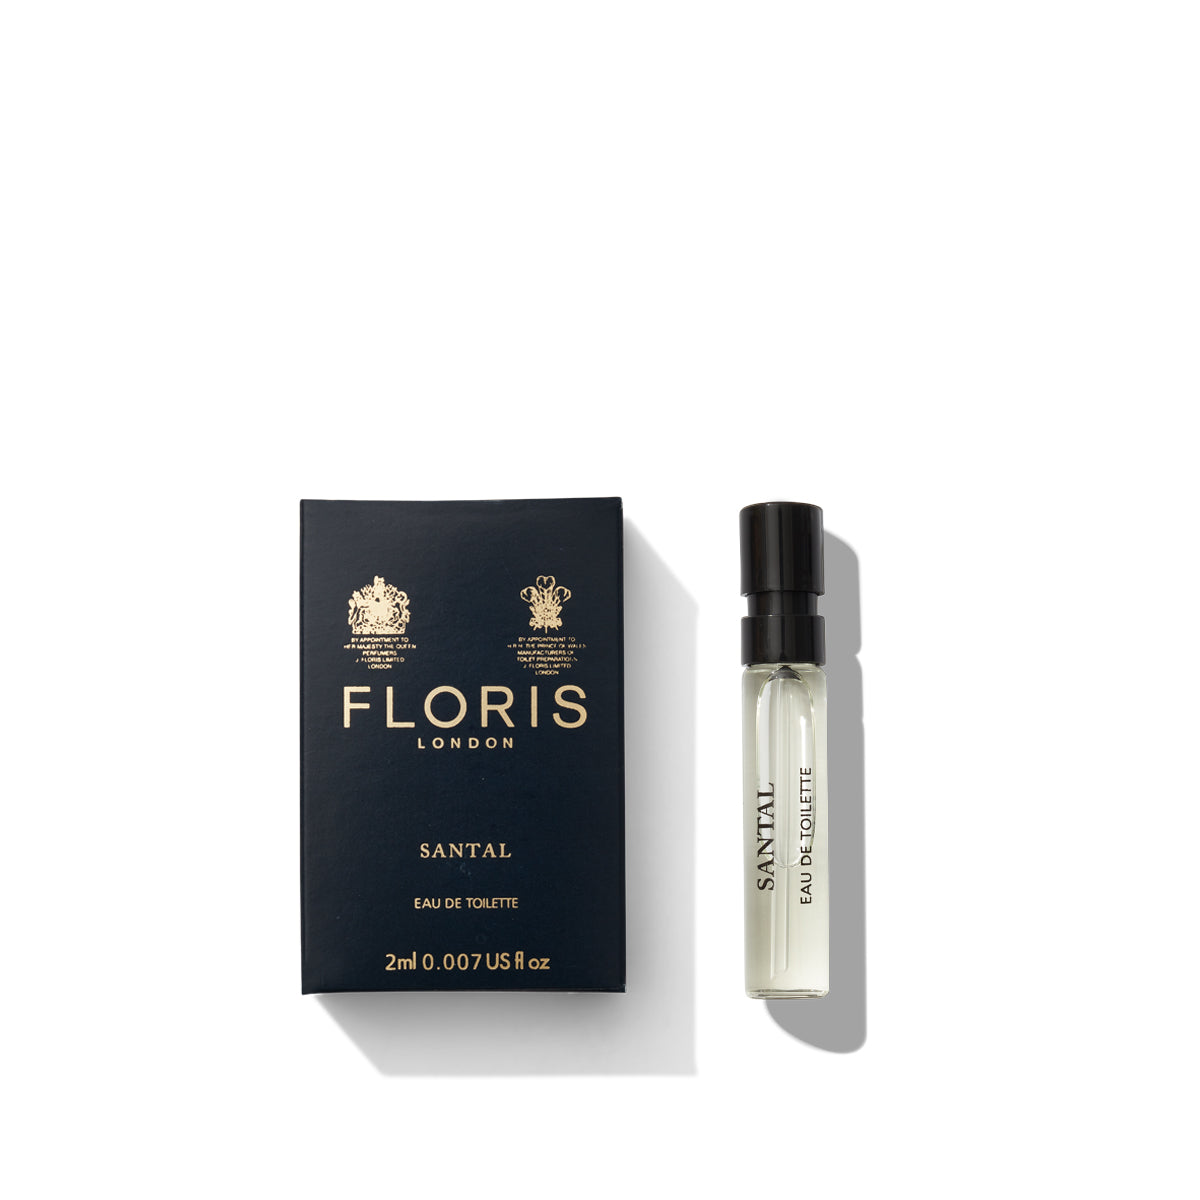 A small box and sample vial of Floris London Santal - Eau de Toilette, a distinctive woody fougère from the men's signature collection, set against a white background.